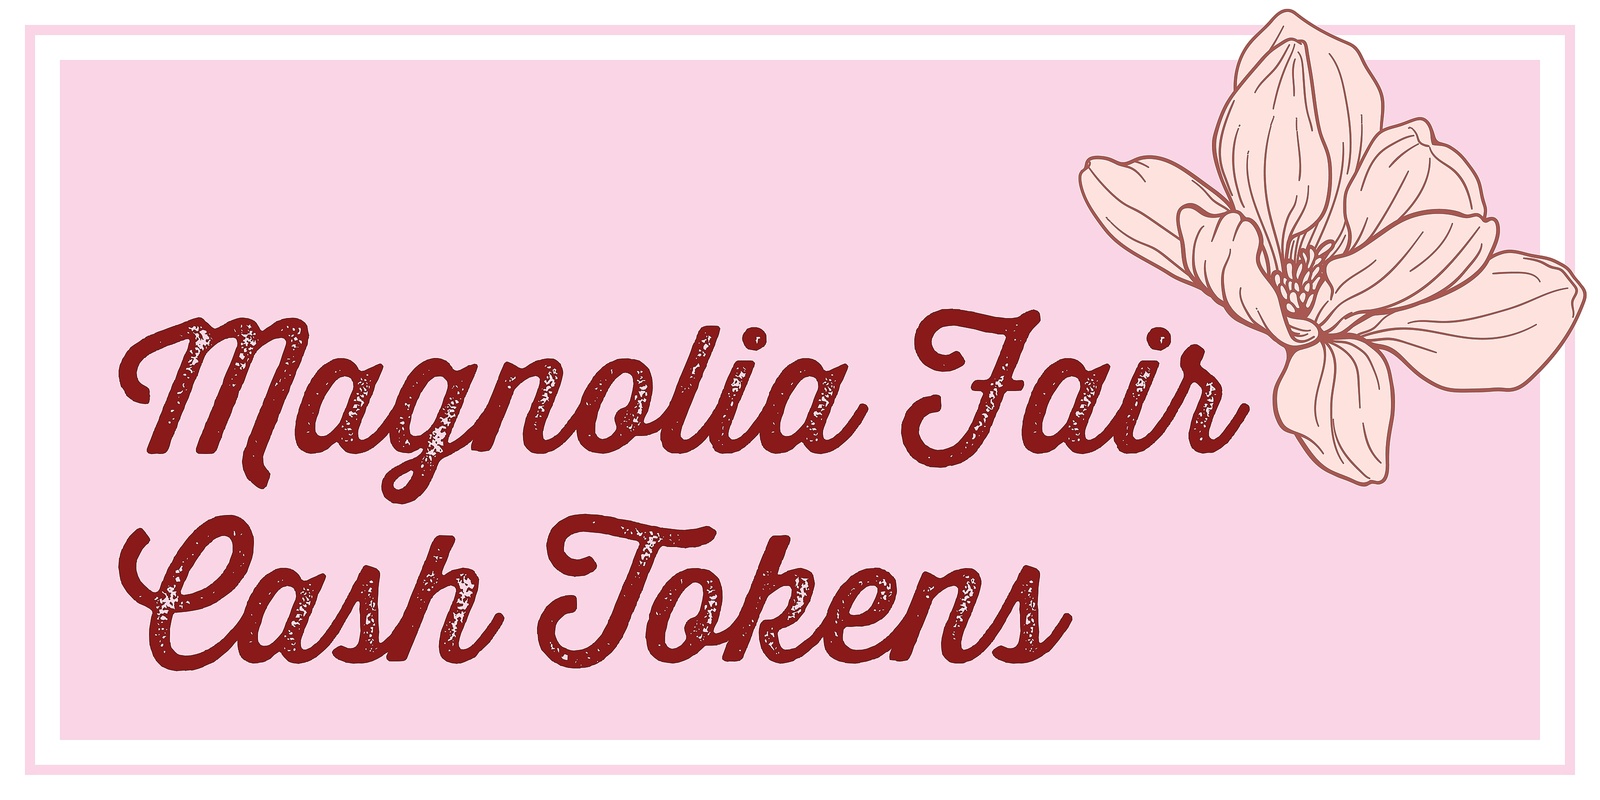 Banner image for Magnolia Fair Cash Tokens